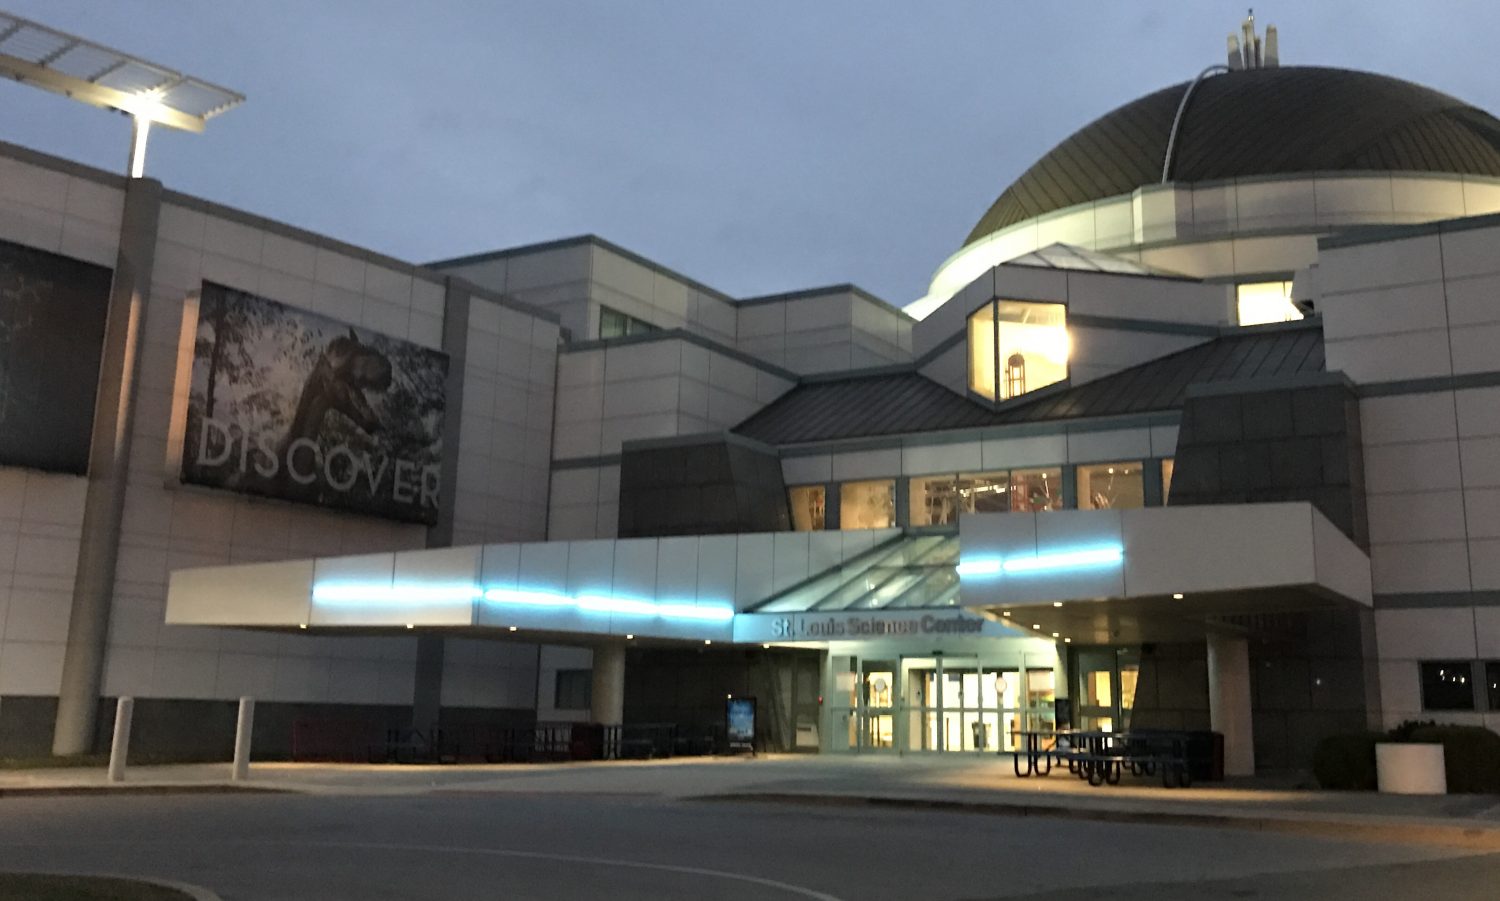 St. Louis Science Center Hosts Science Fiction Events Each Month